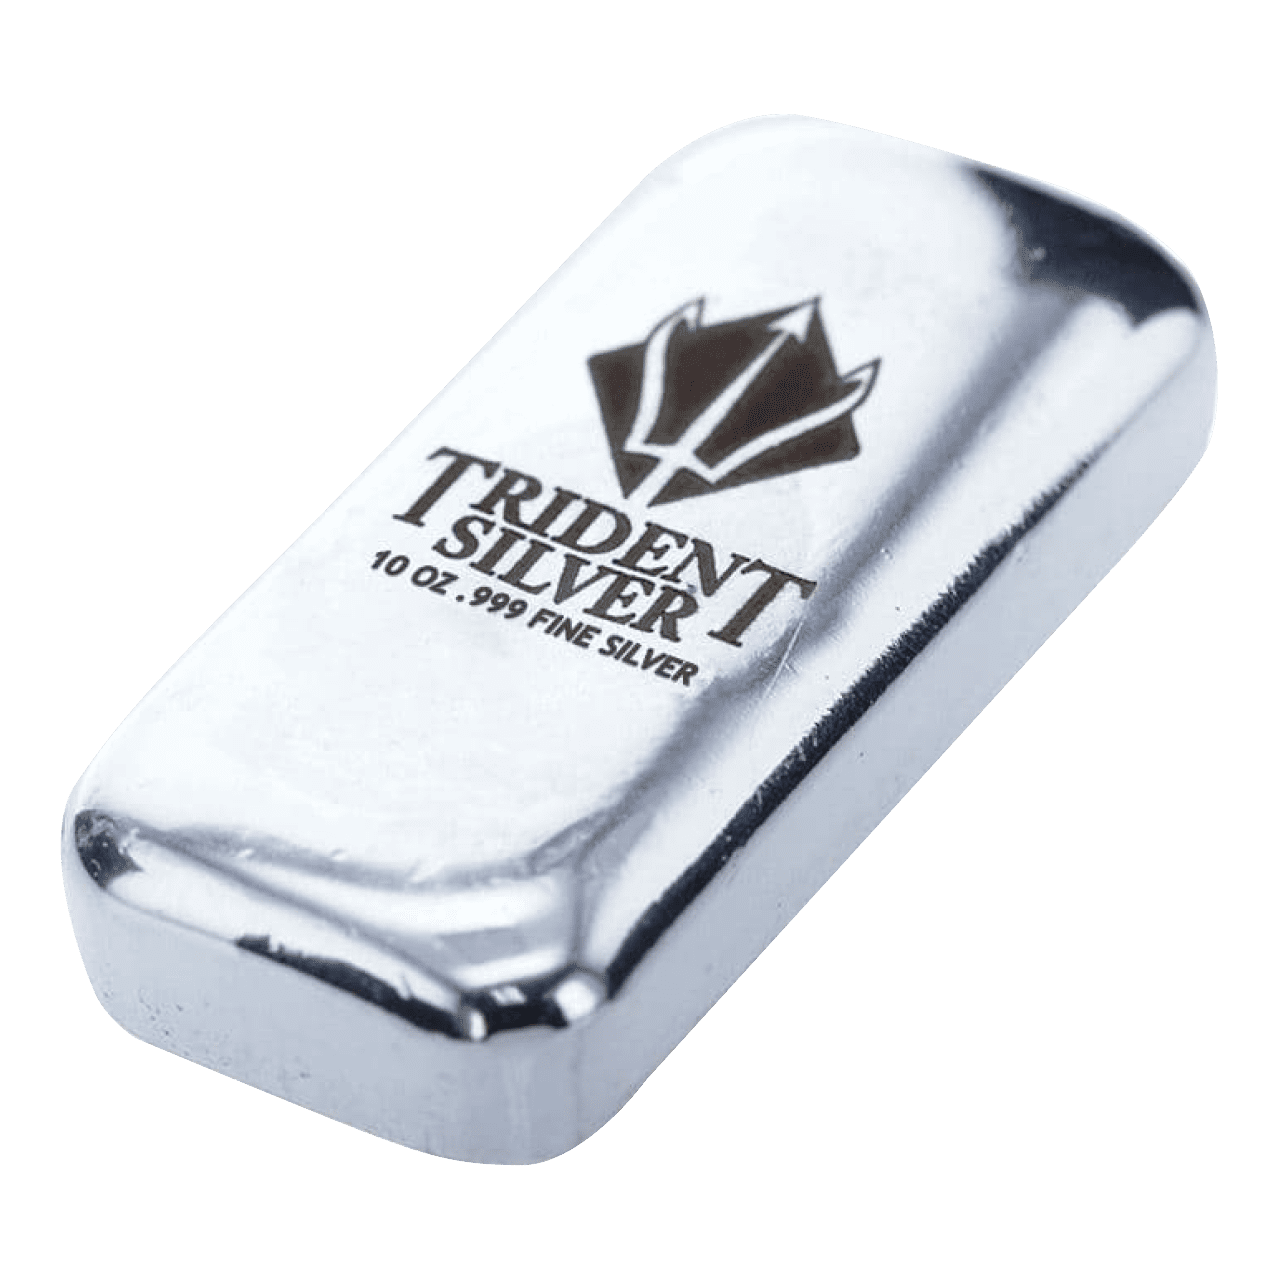 10 oz Poured Silver Bar- Trident Silver